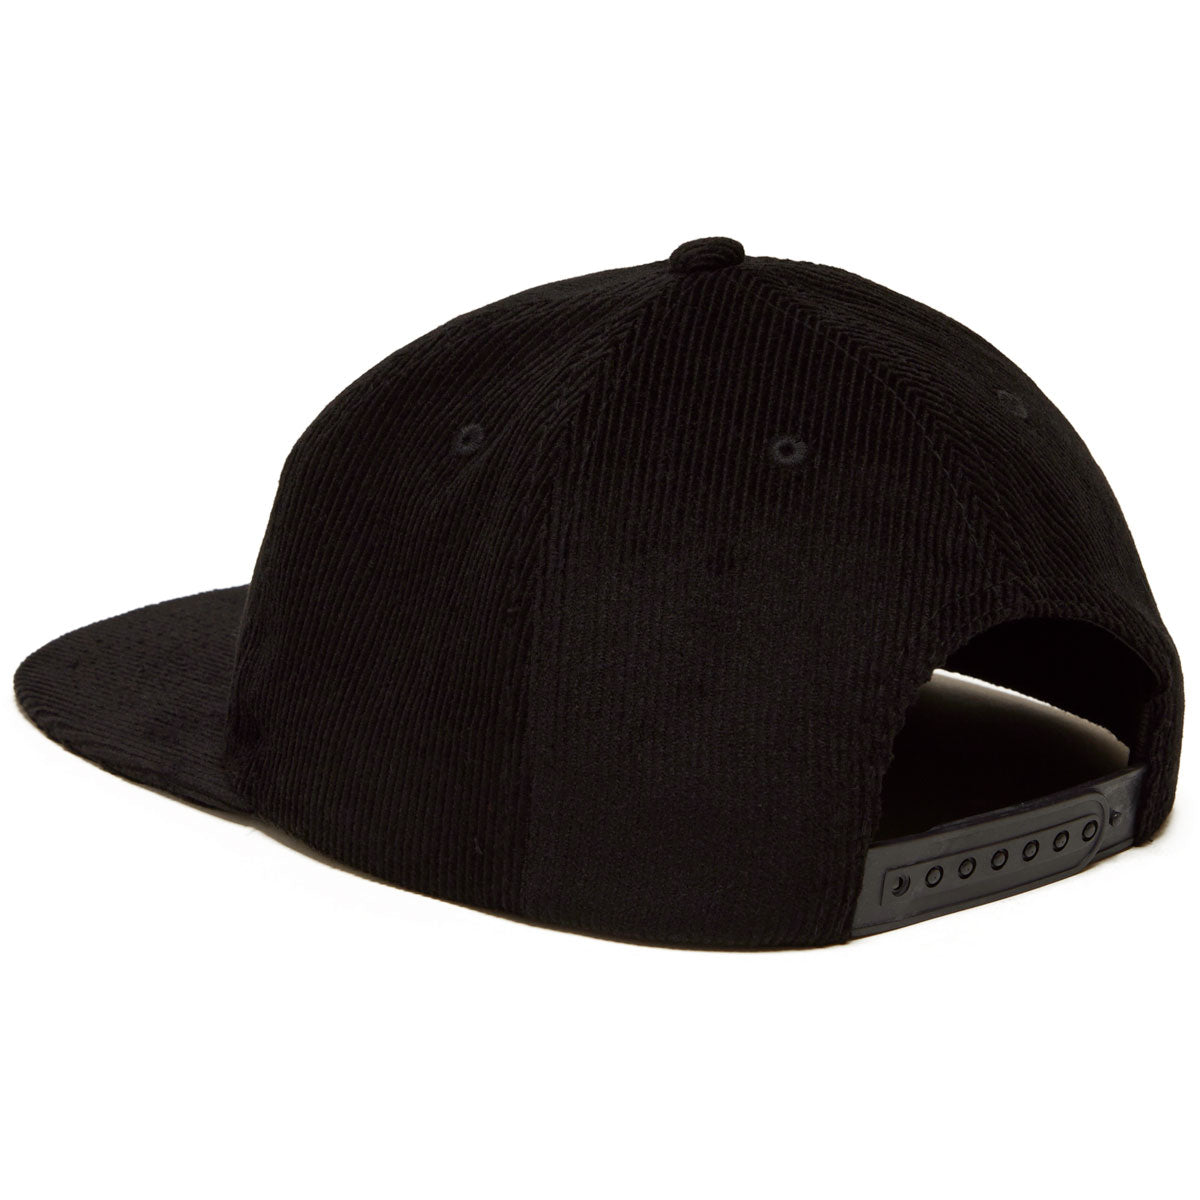 CCS 96 Logo Cord Snapback Hat - Black image 2